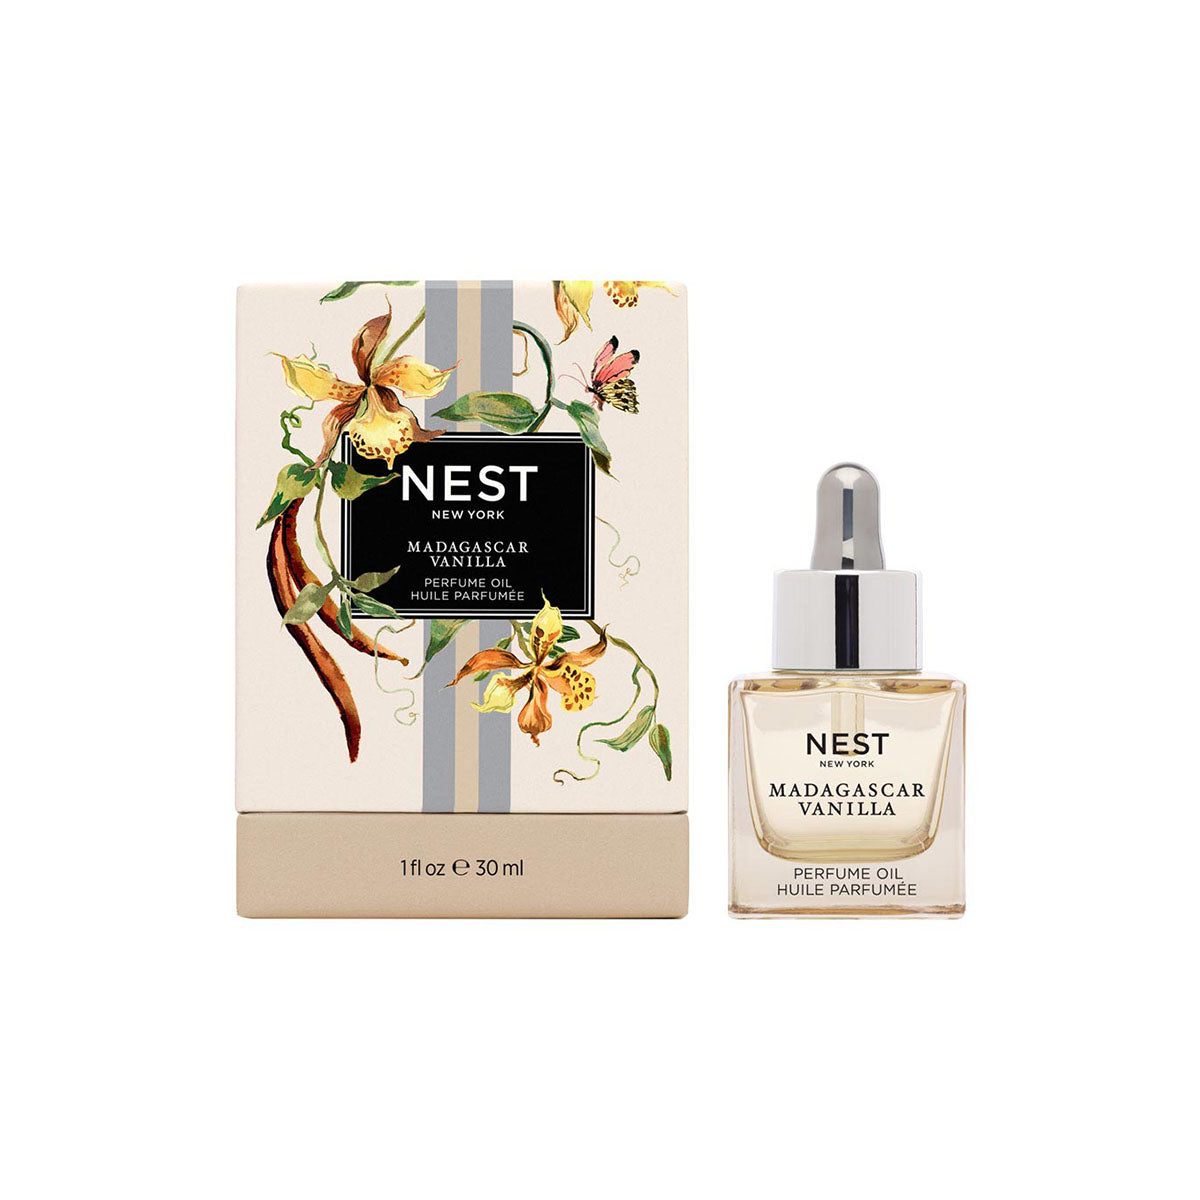 Nest Perfume Oil 30mL/1.0 fl oz. - Madagascar Vanilla